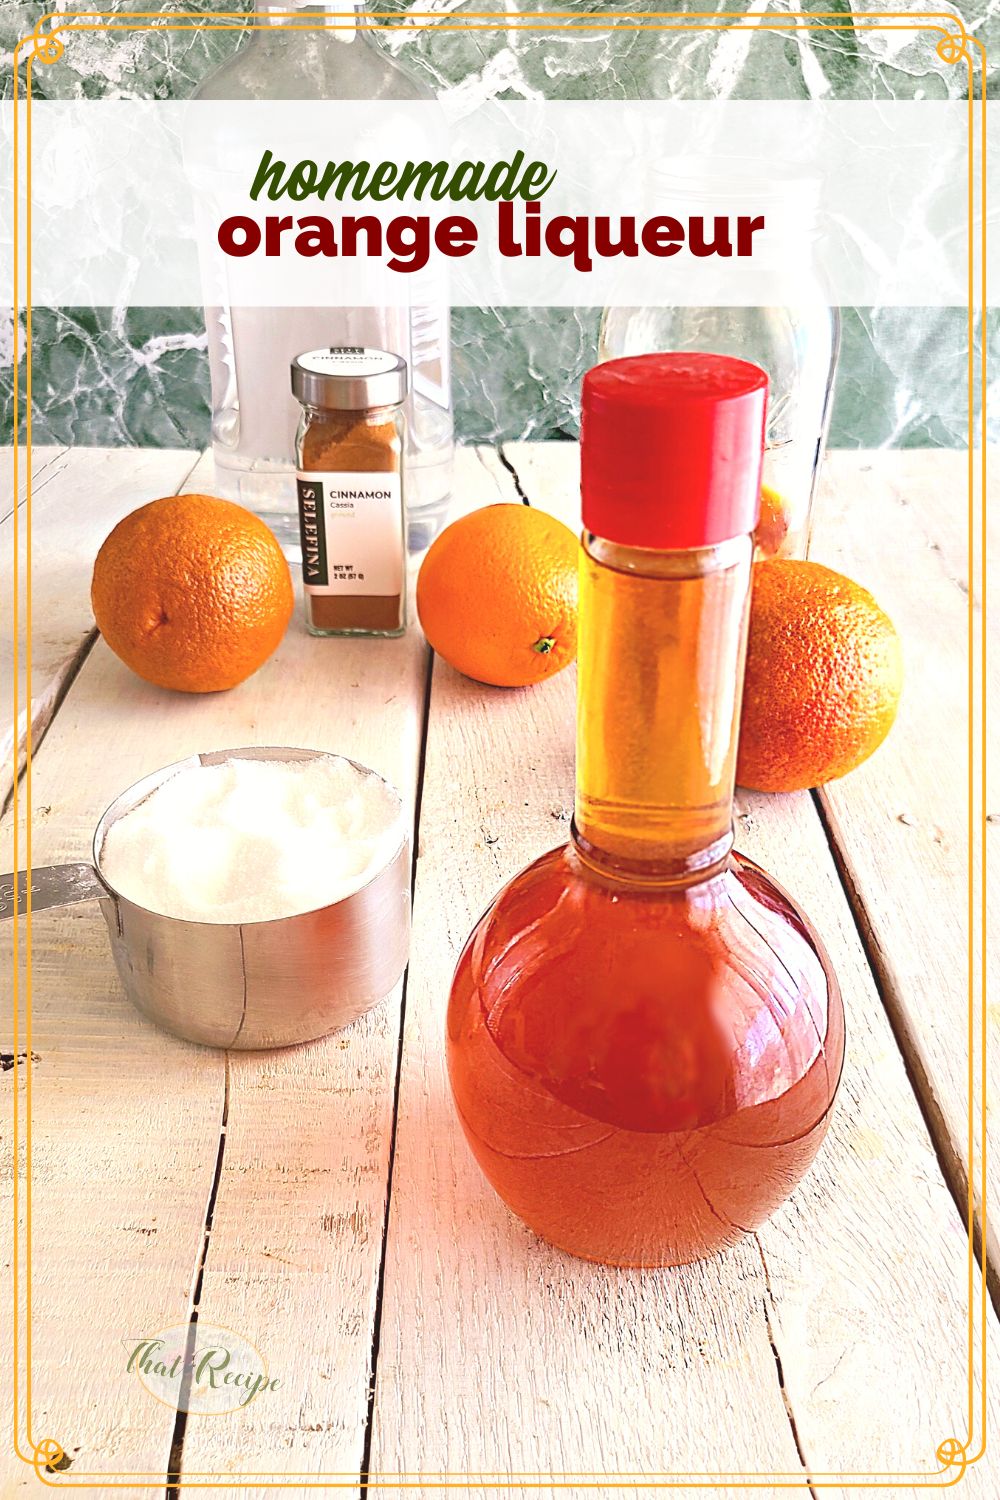 bottle of orange liqueur with ingredients